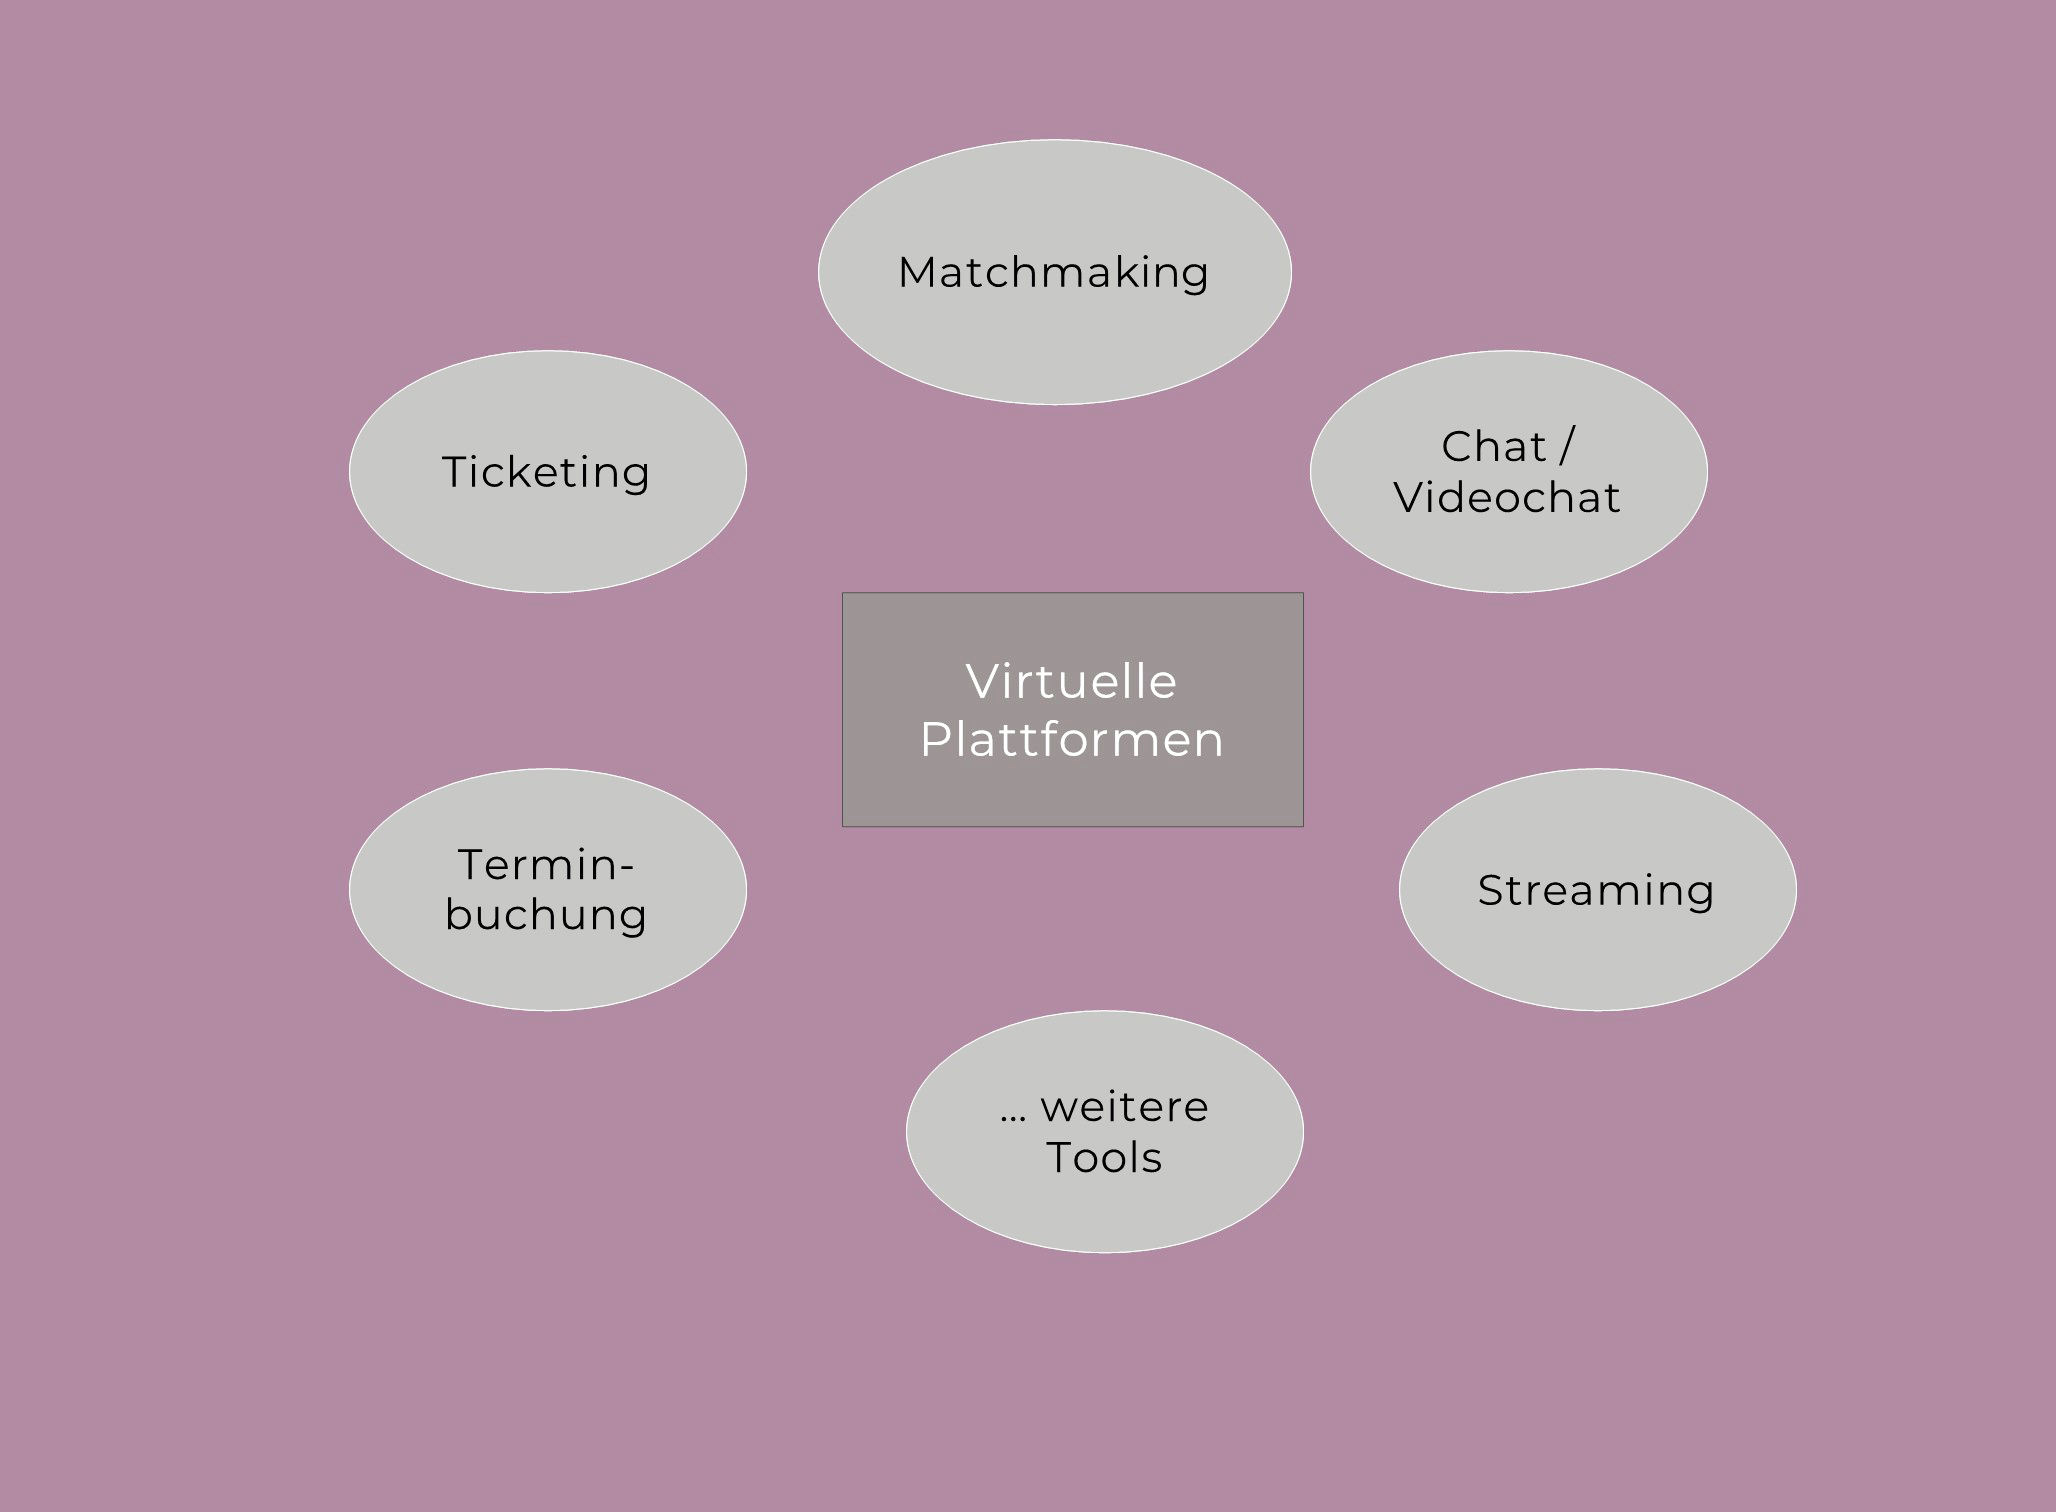 Mindmap zu den Zielgruppen virtueller Plattformen. Zielgruppen sind: Ticketing, Terminbuchung, Matchmaking, Chat/Videochat, Streaming, weitere Tools